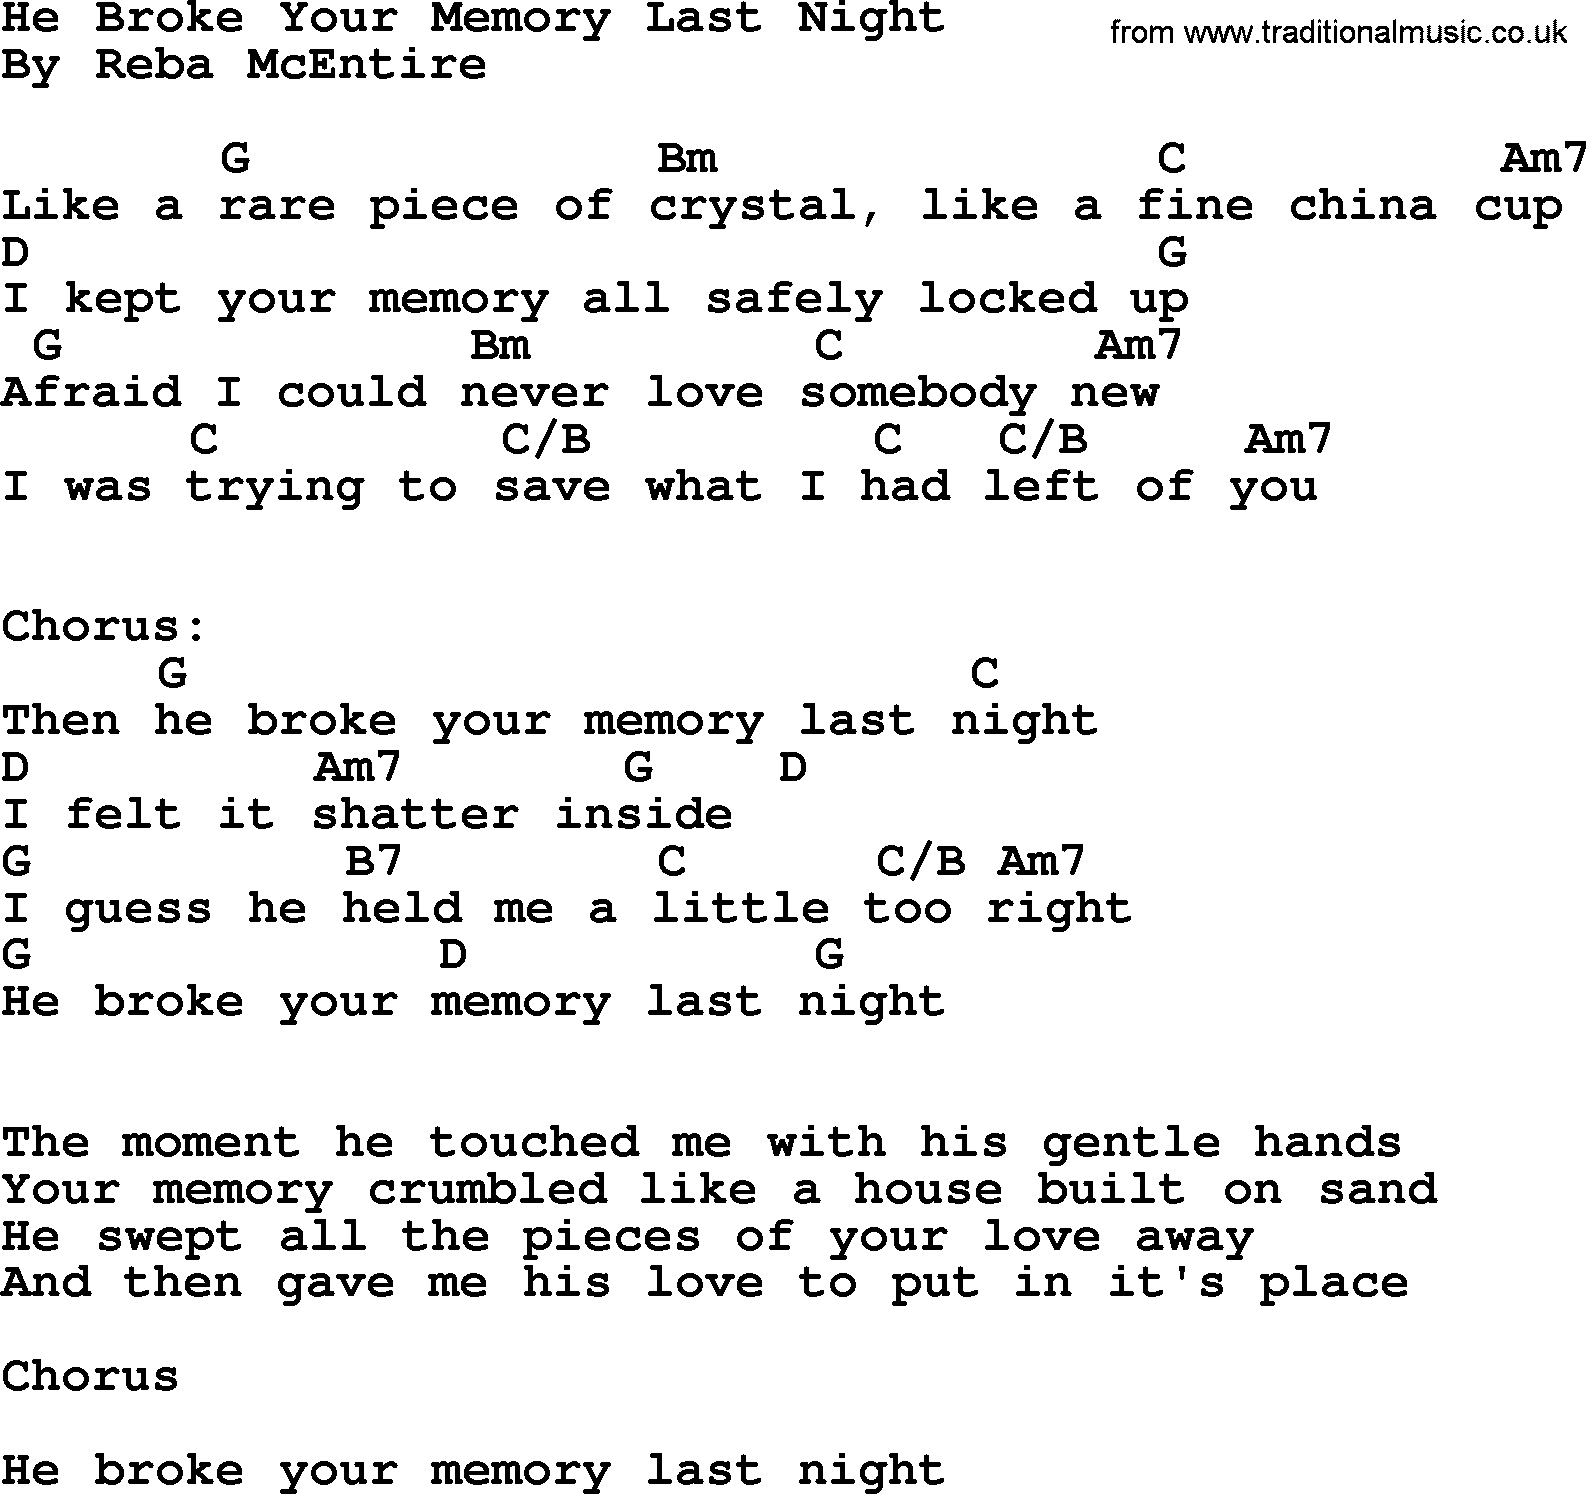 Reba McEntire song: He Broke Your Memory Last Night, lyrics and chords